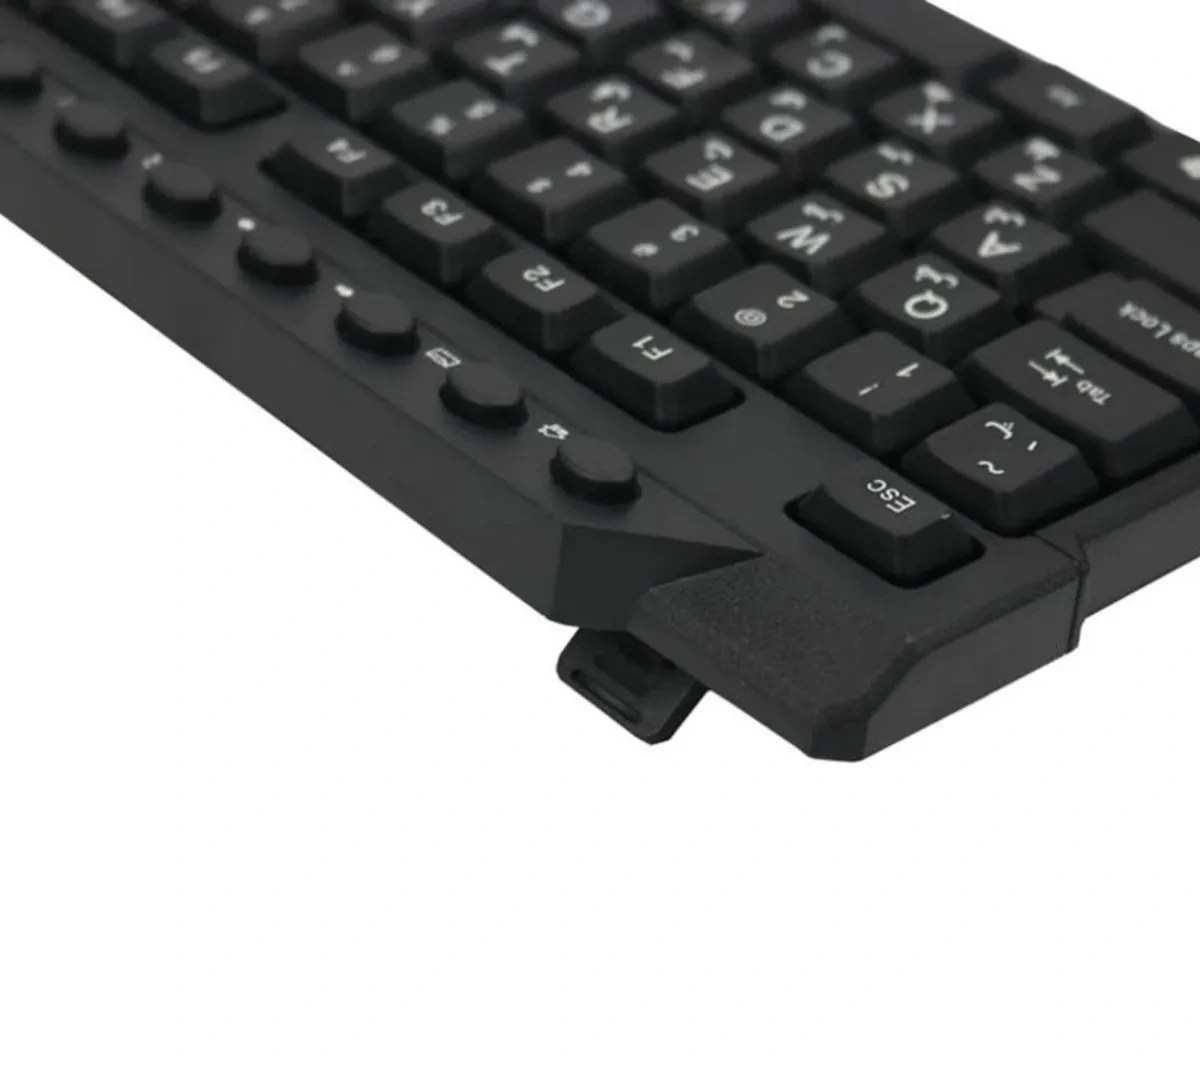 خرید و قیمت کیبورد مچر مدل MR-310 ا Macher MR-310 Wired Keyboard | ترب